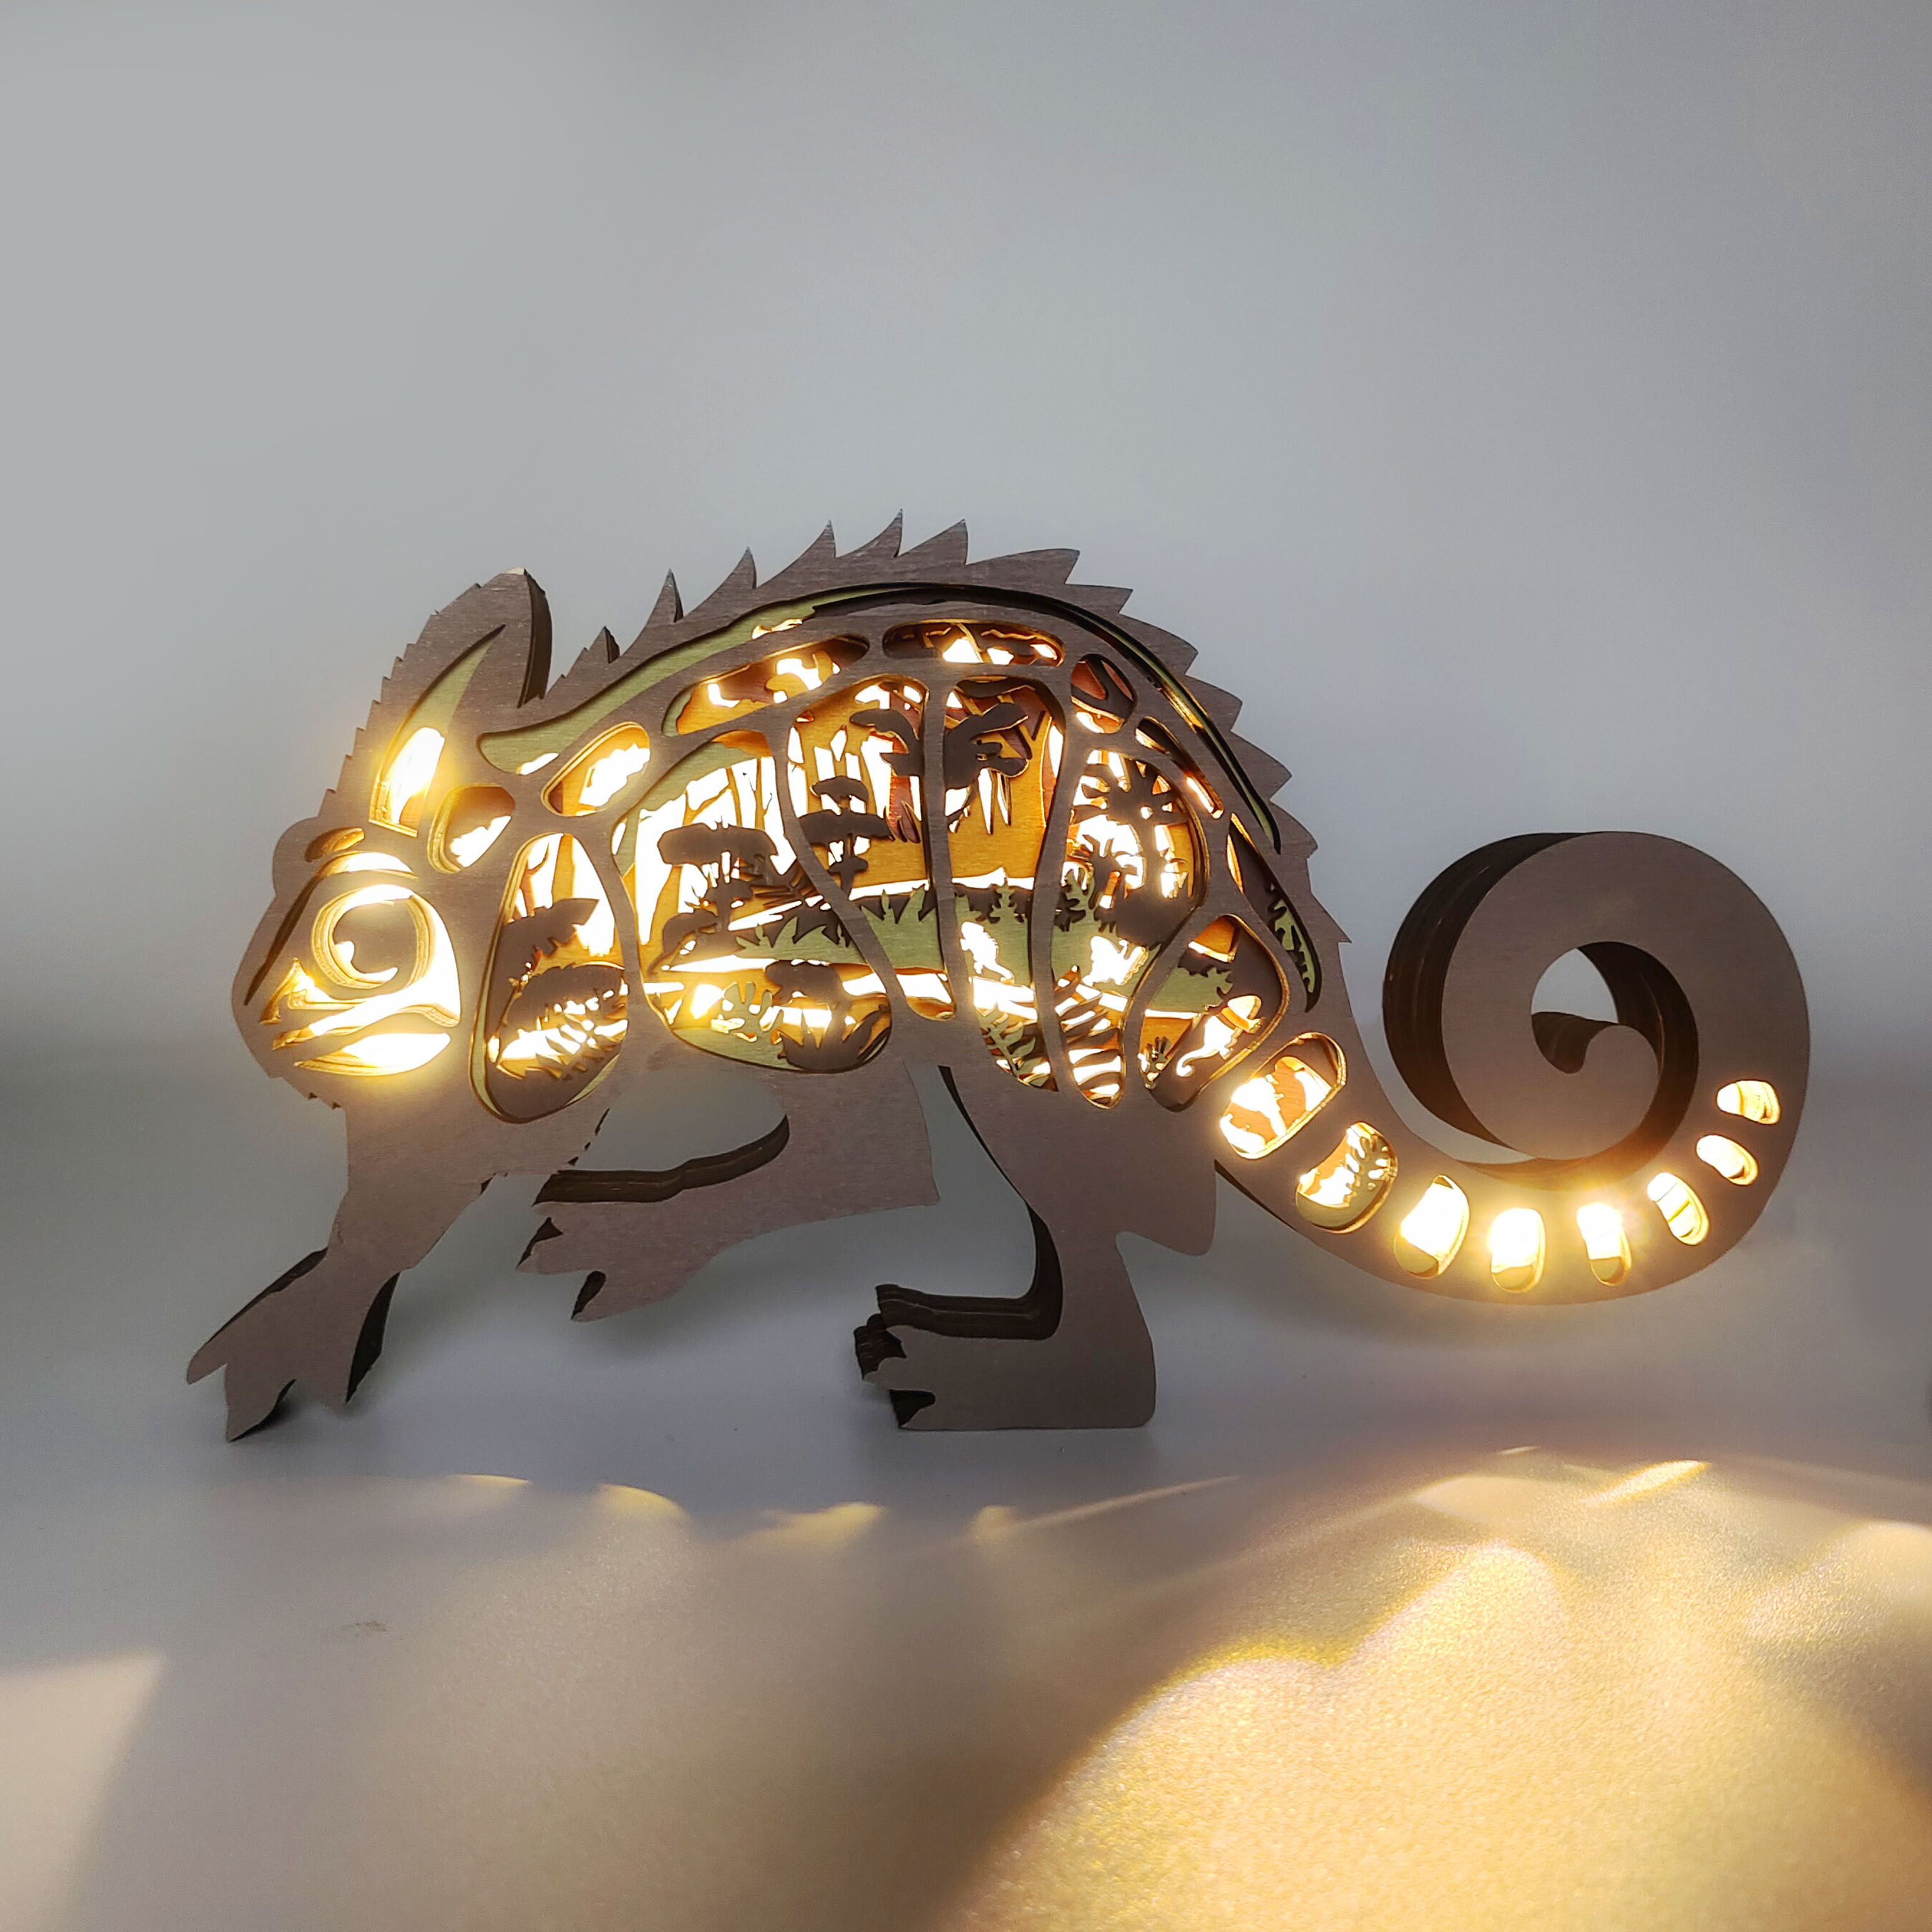 New Arrivals✨-Chameleon Wooden Carving Gift